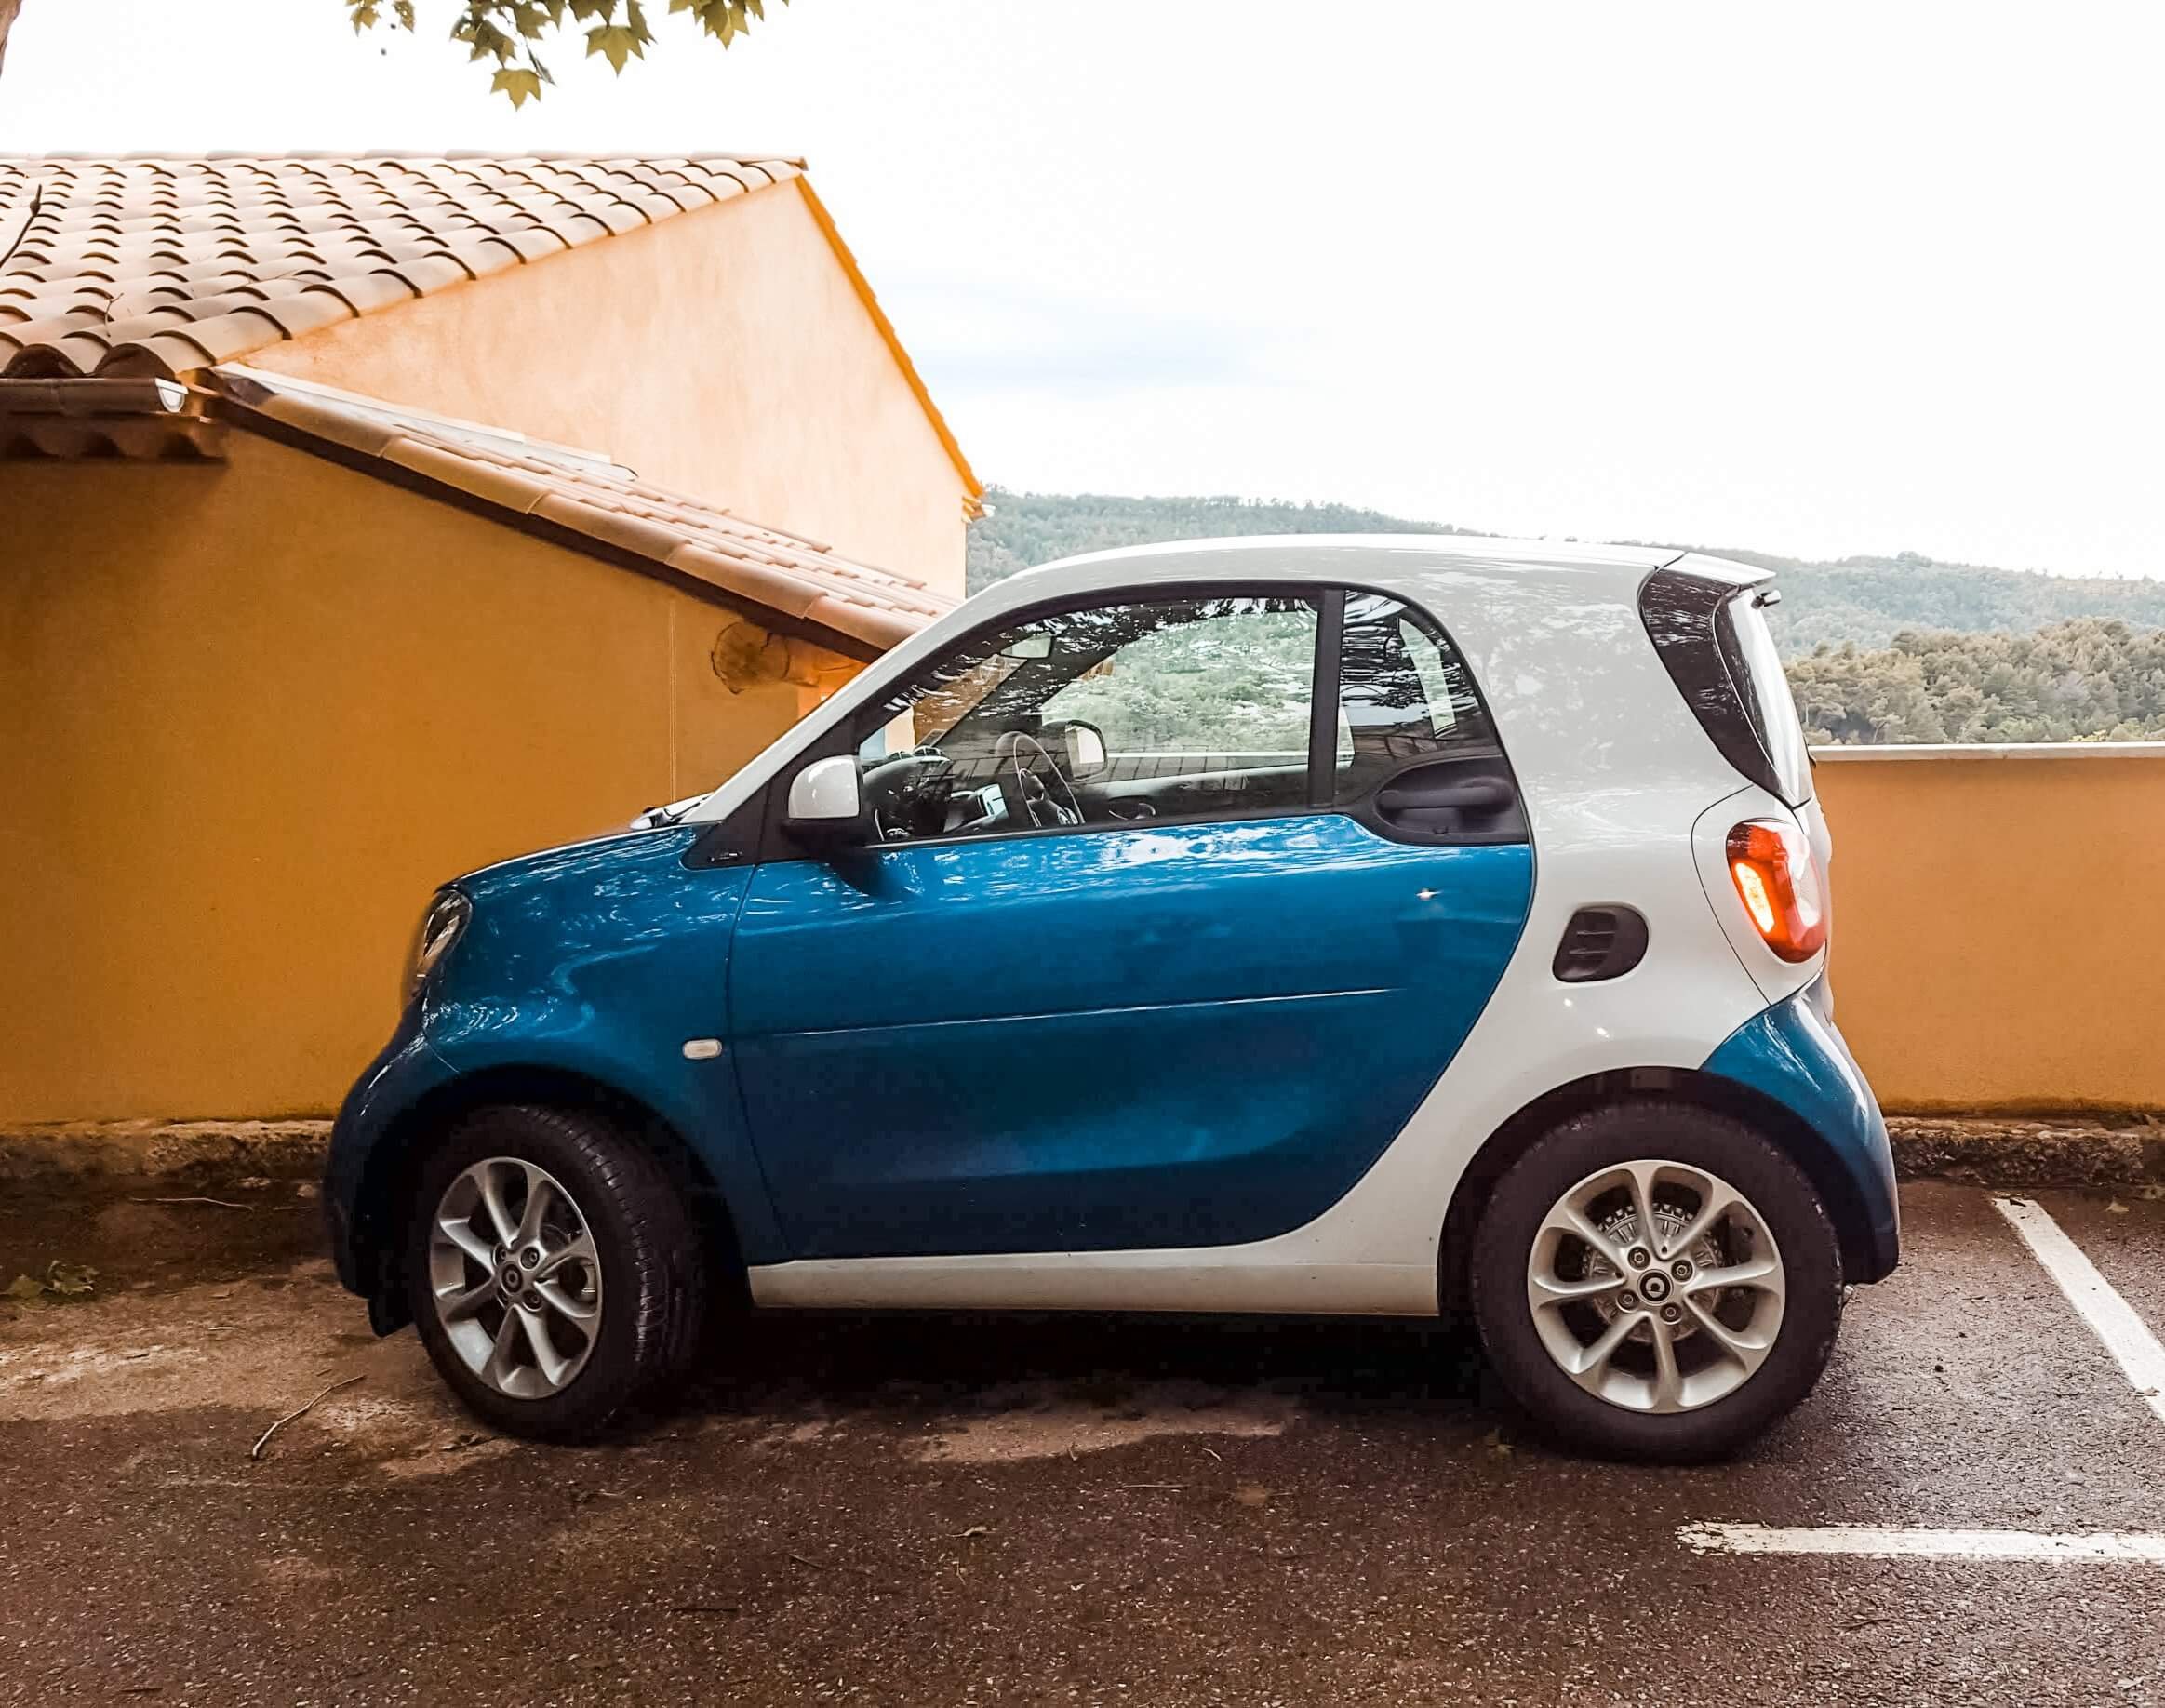 Smart Car rental car in France